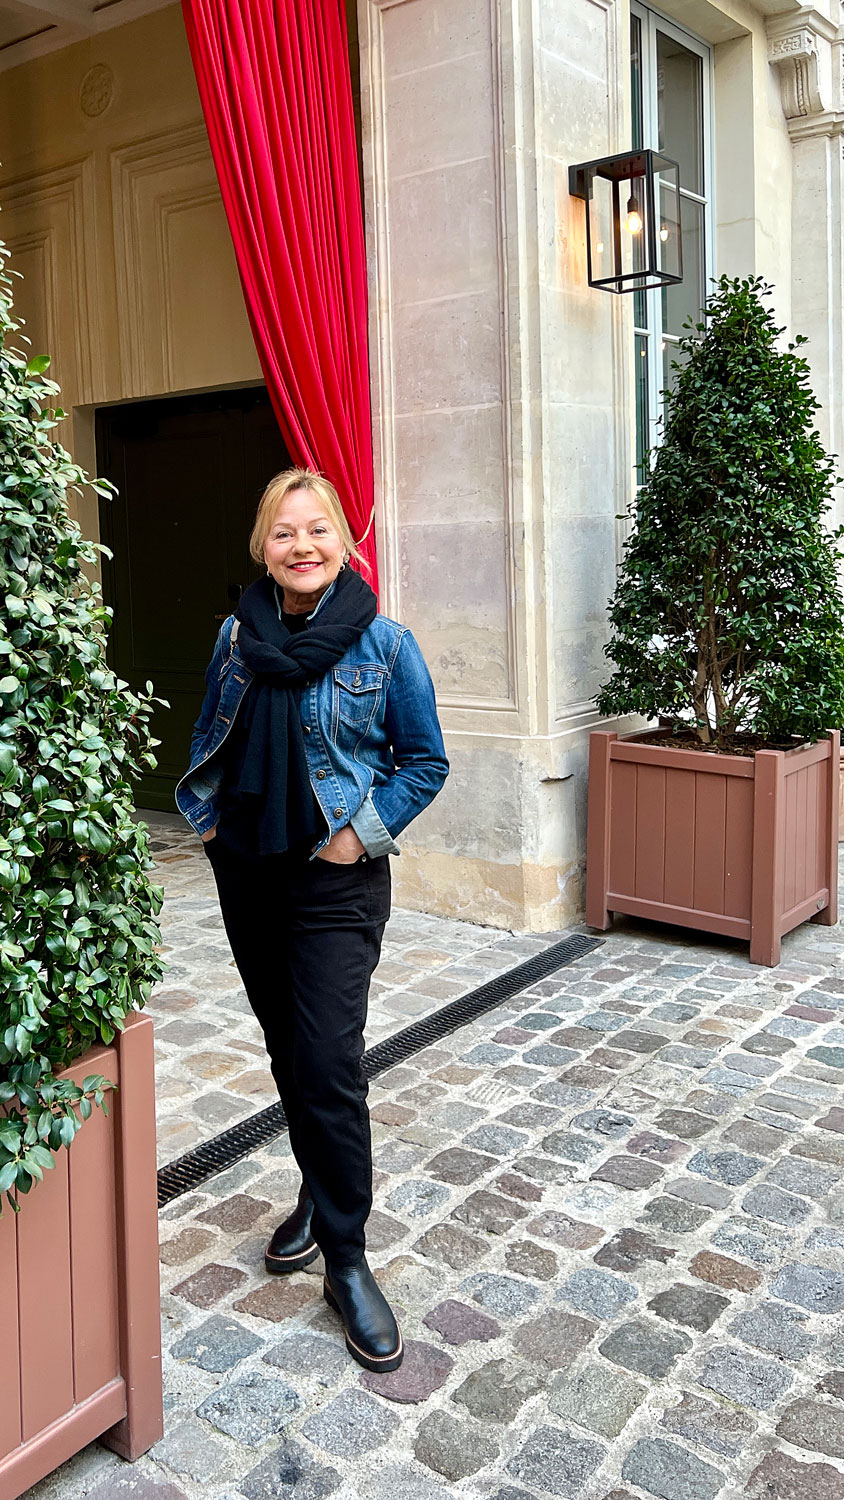 Mary Ann Pickett In Paris is jeans jacket